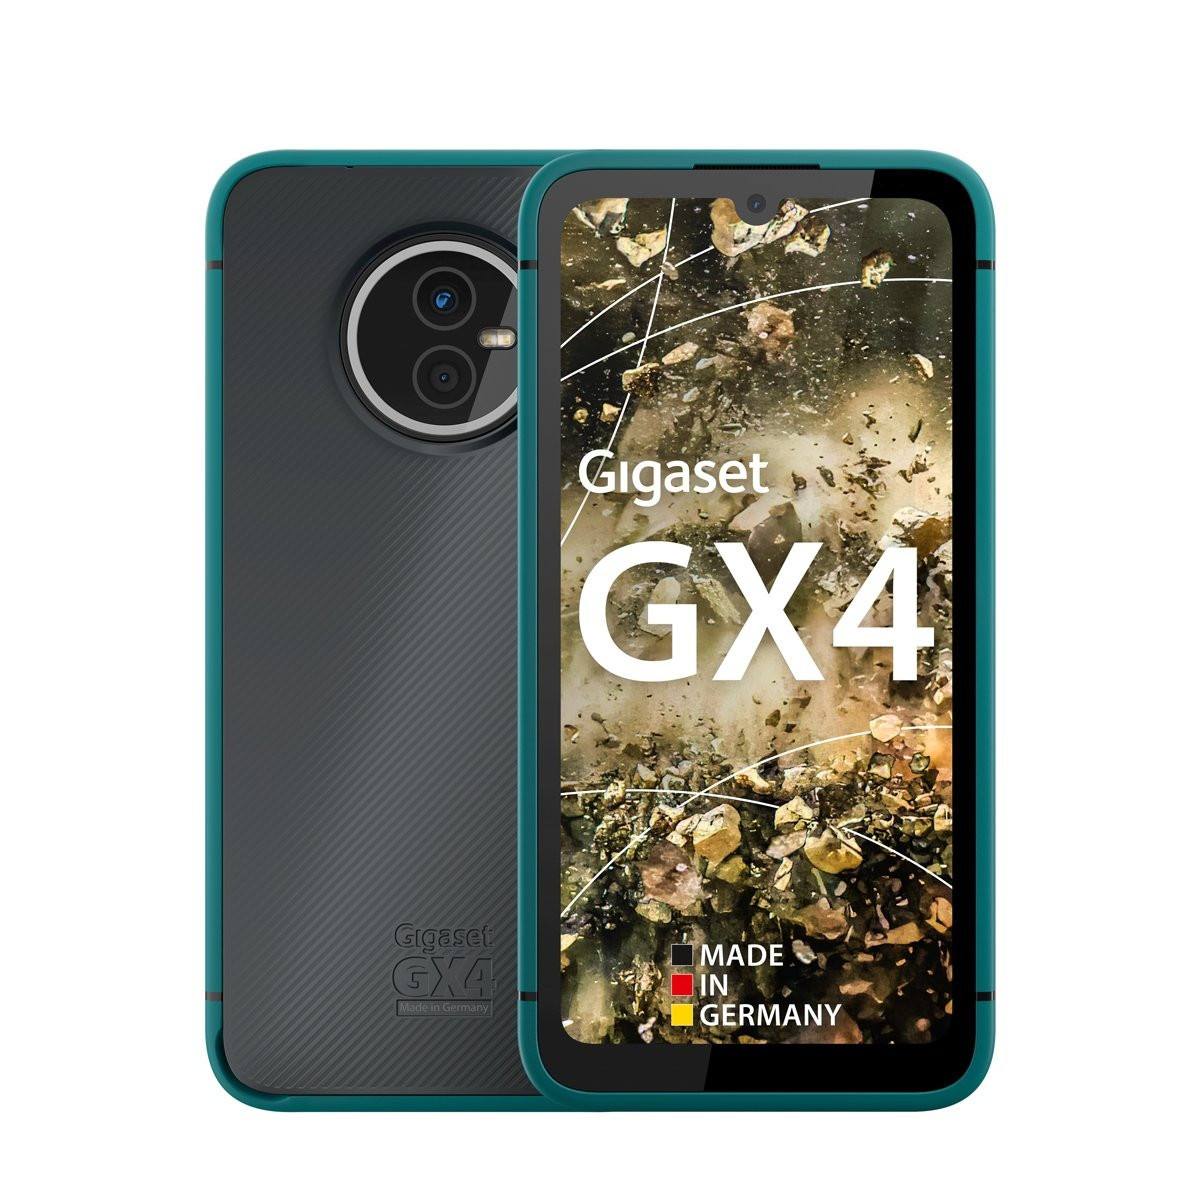 Gigaset GX4 - 64GB Smartphone Blauw